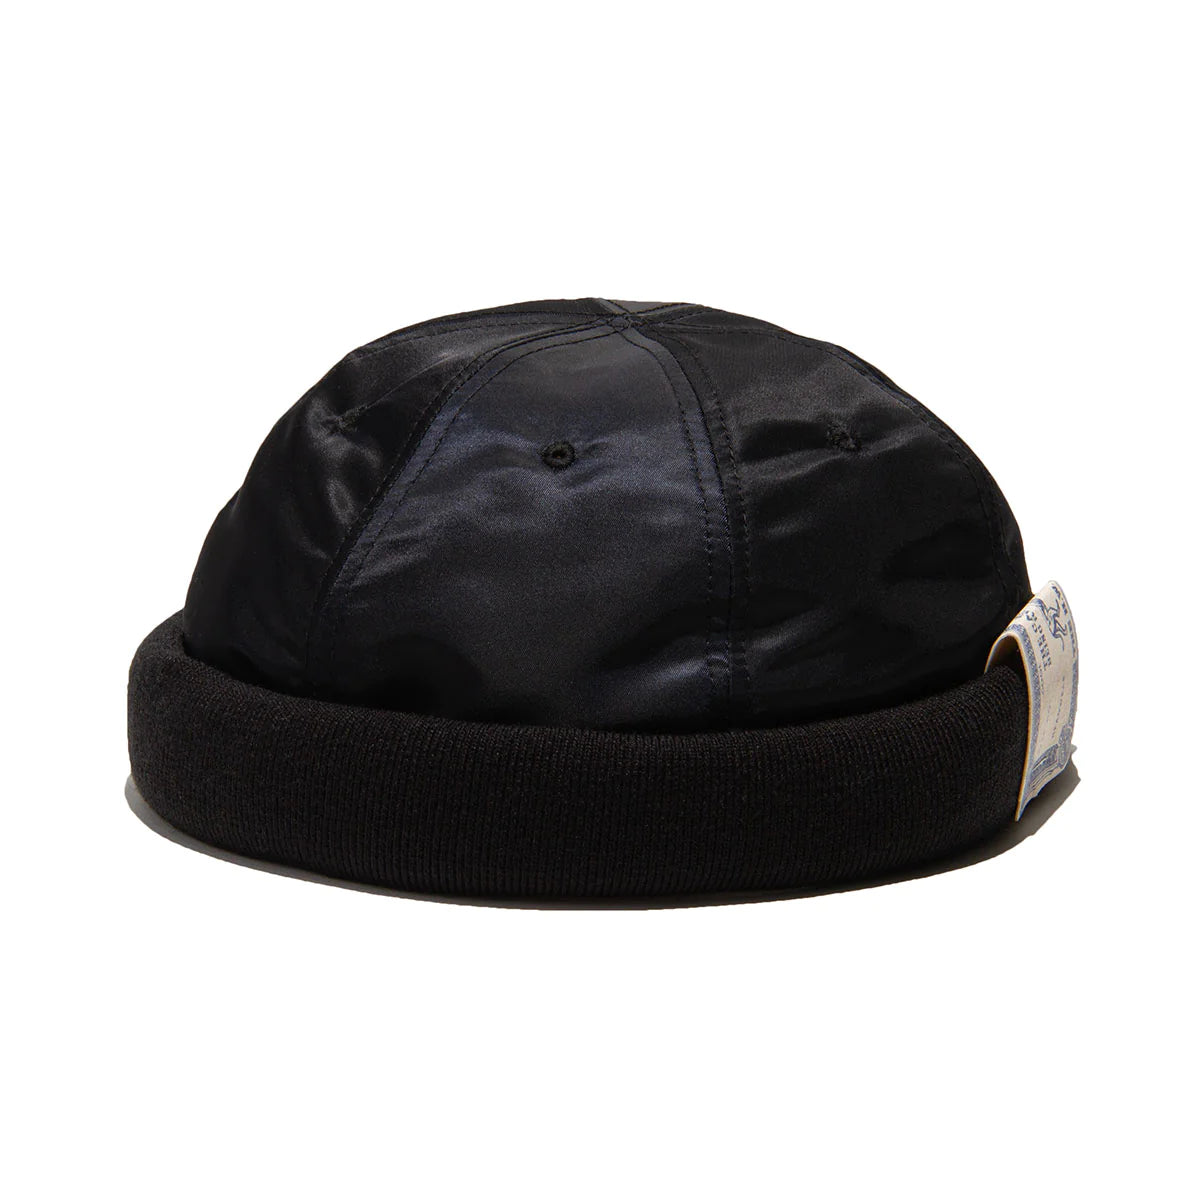 The H.W. Dog & Co - MA-1 ROLL CAP - BLACK